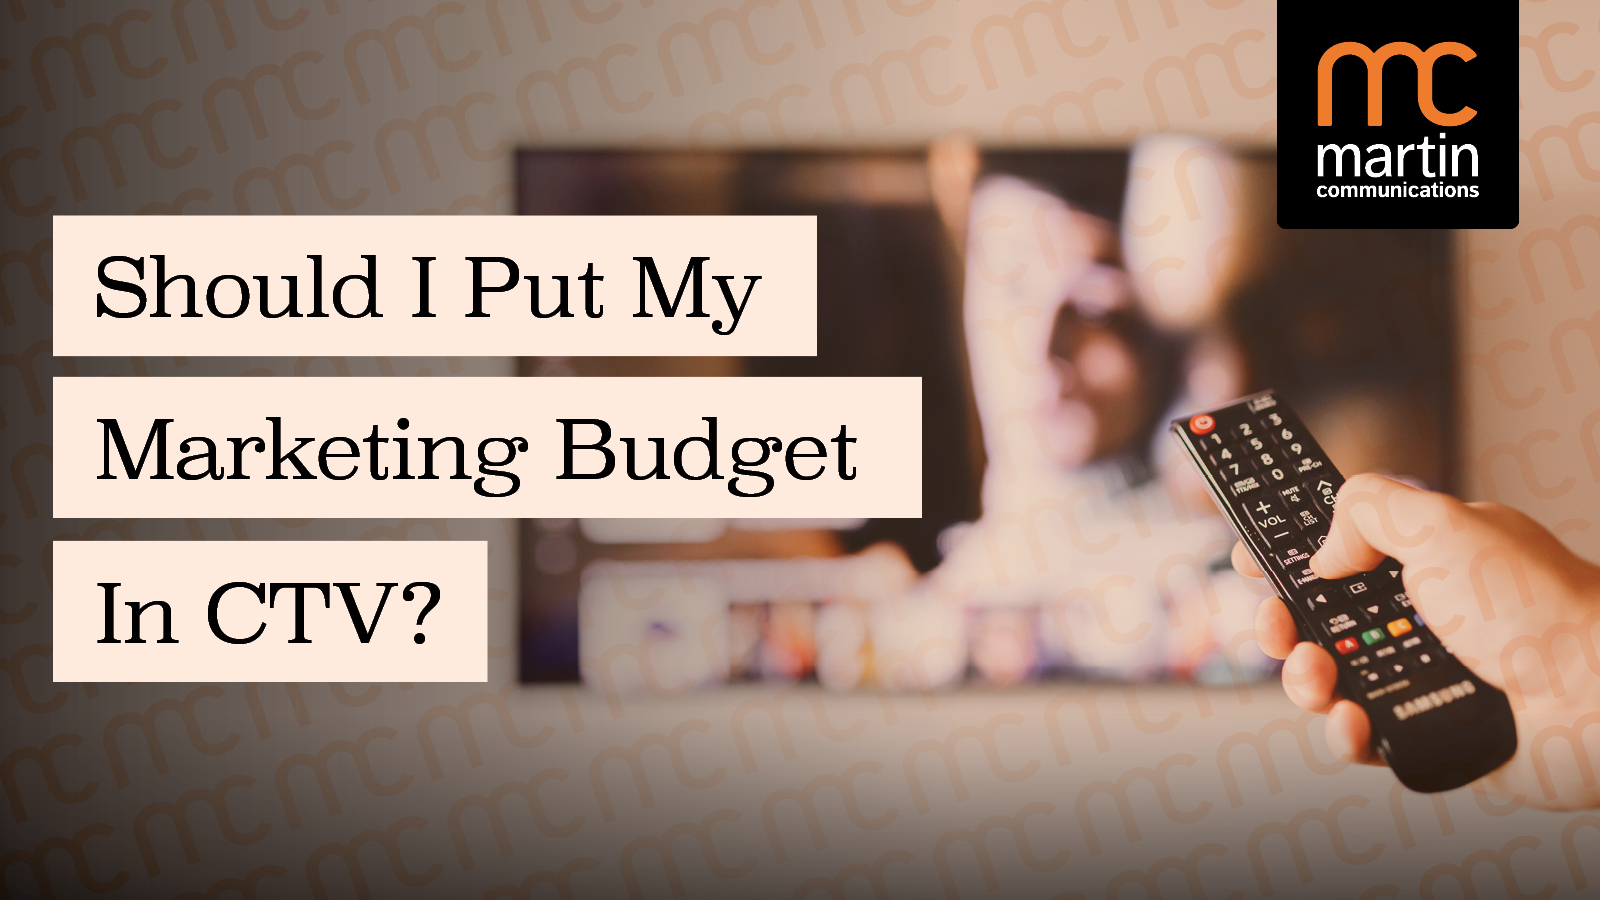 Should I put my marketing budget in CTV?